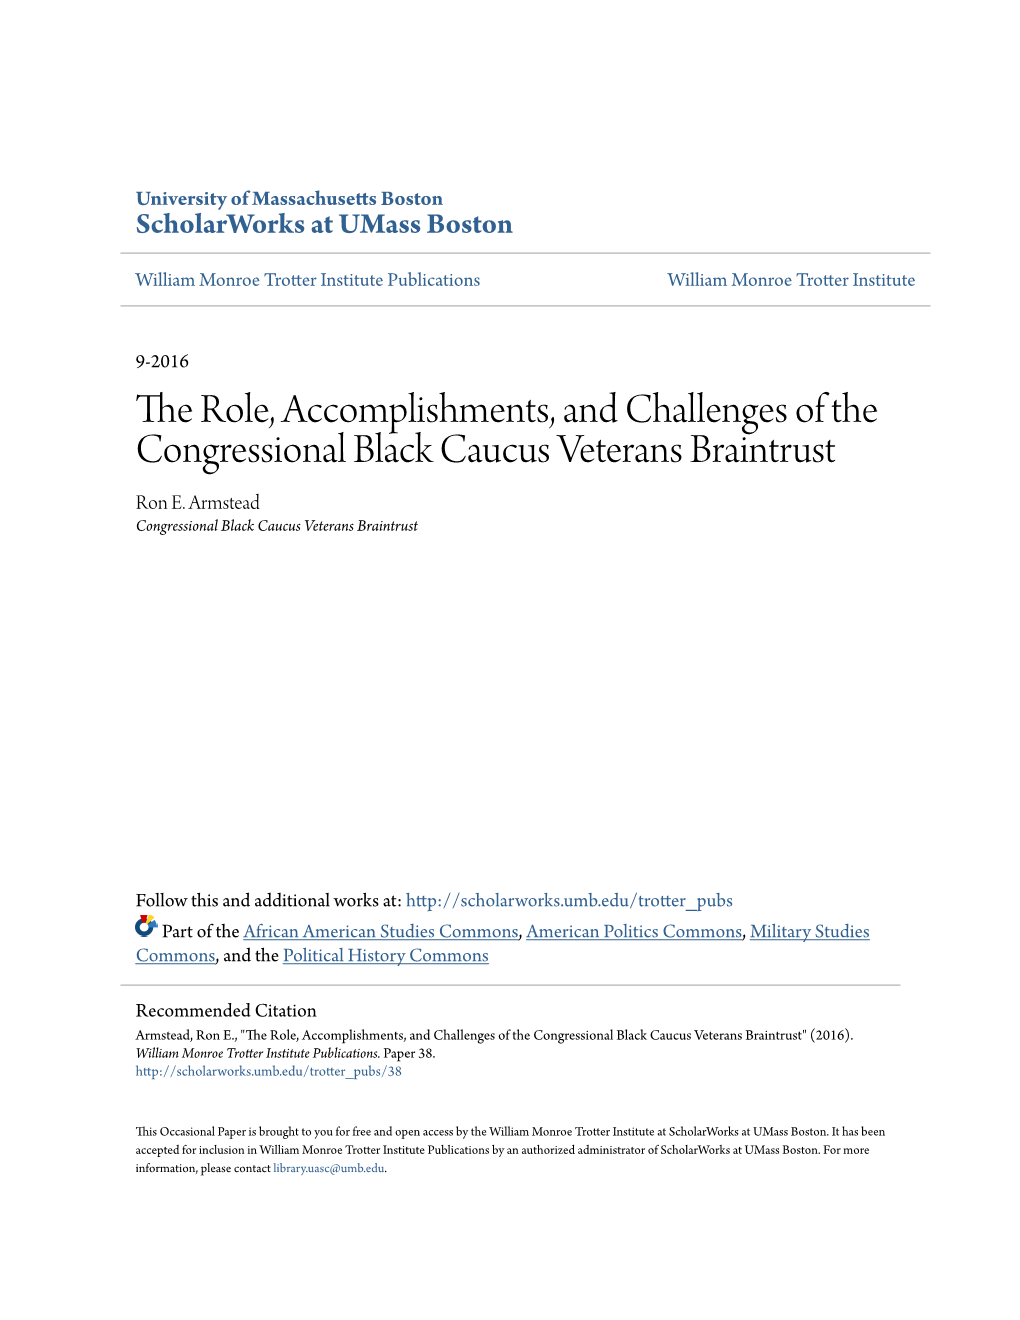 The Role, Accomplishments, and Challenges of the Congressional Black Caucus Veterans Braintrust Ron E